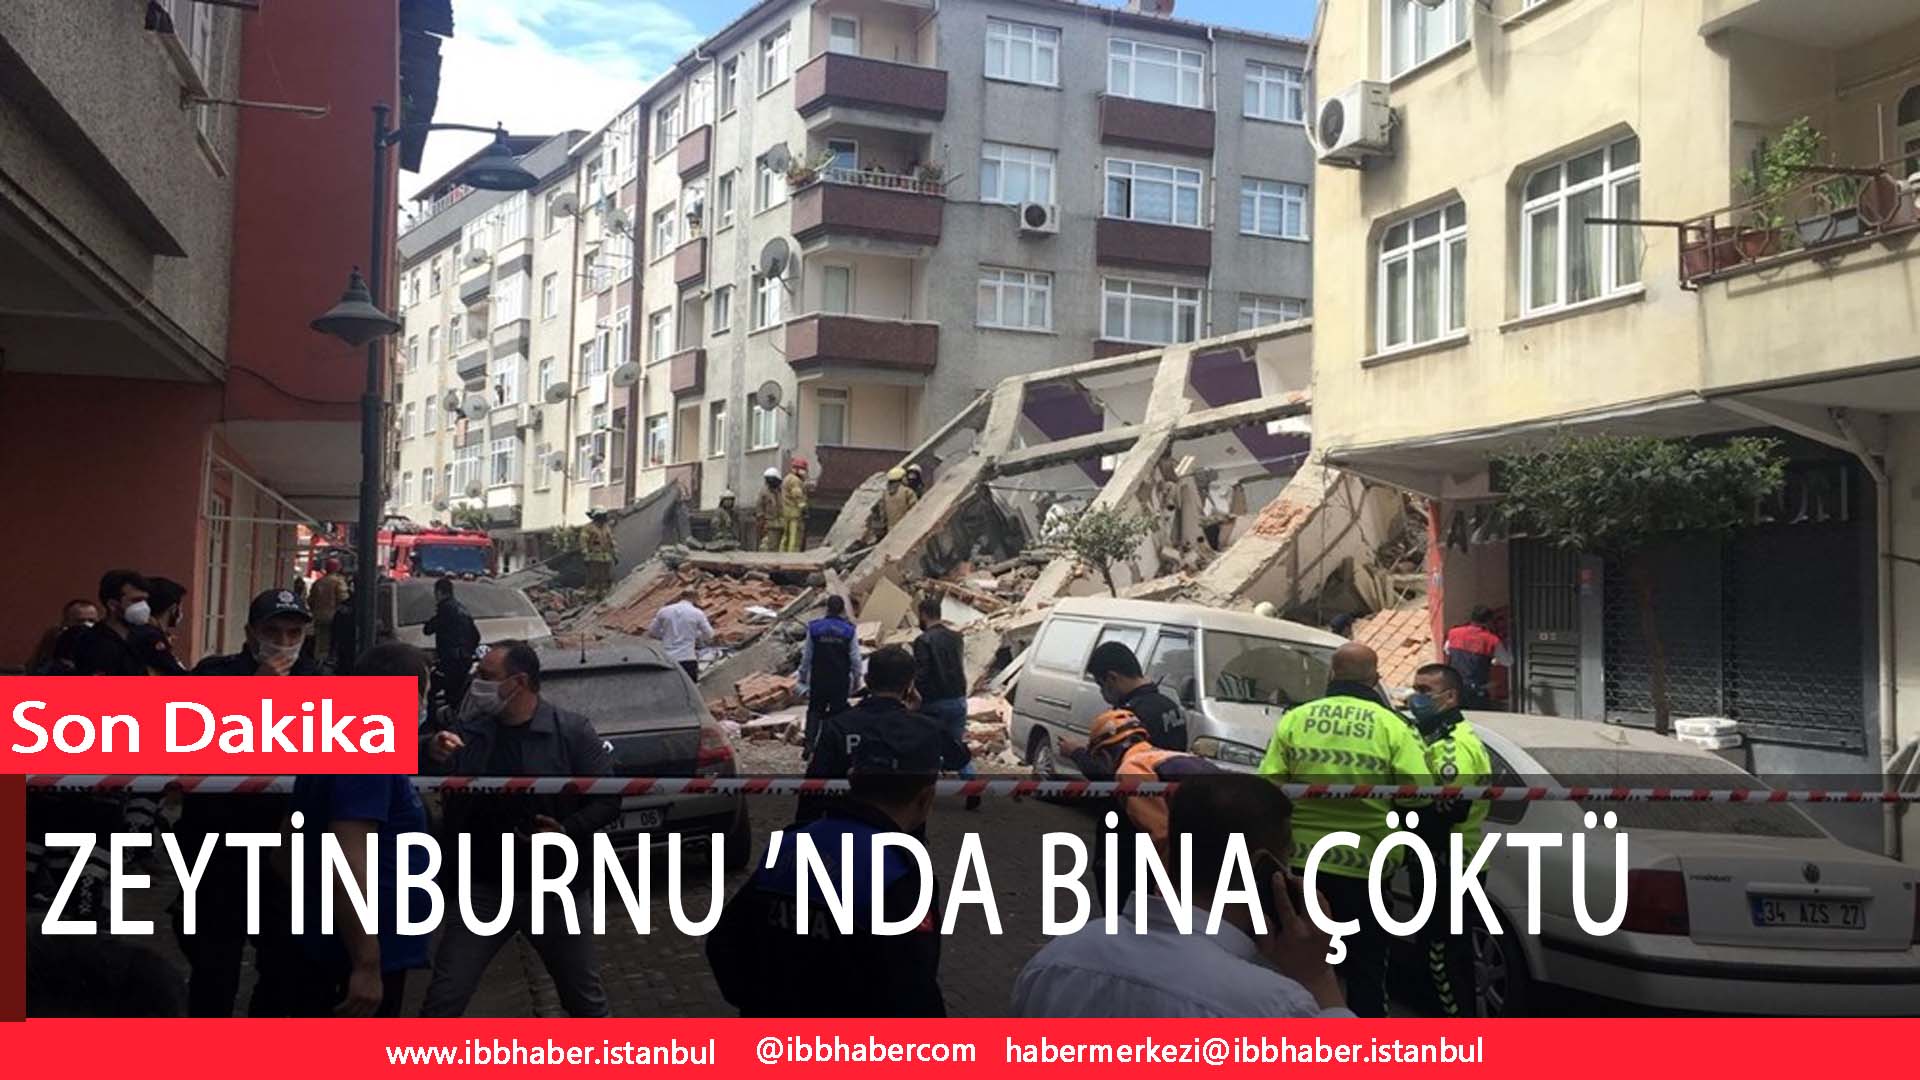 Son Dakika: Zeytinburnu ’nda bina çöktü